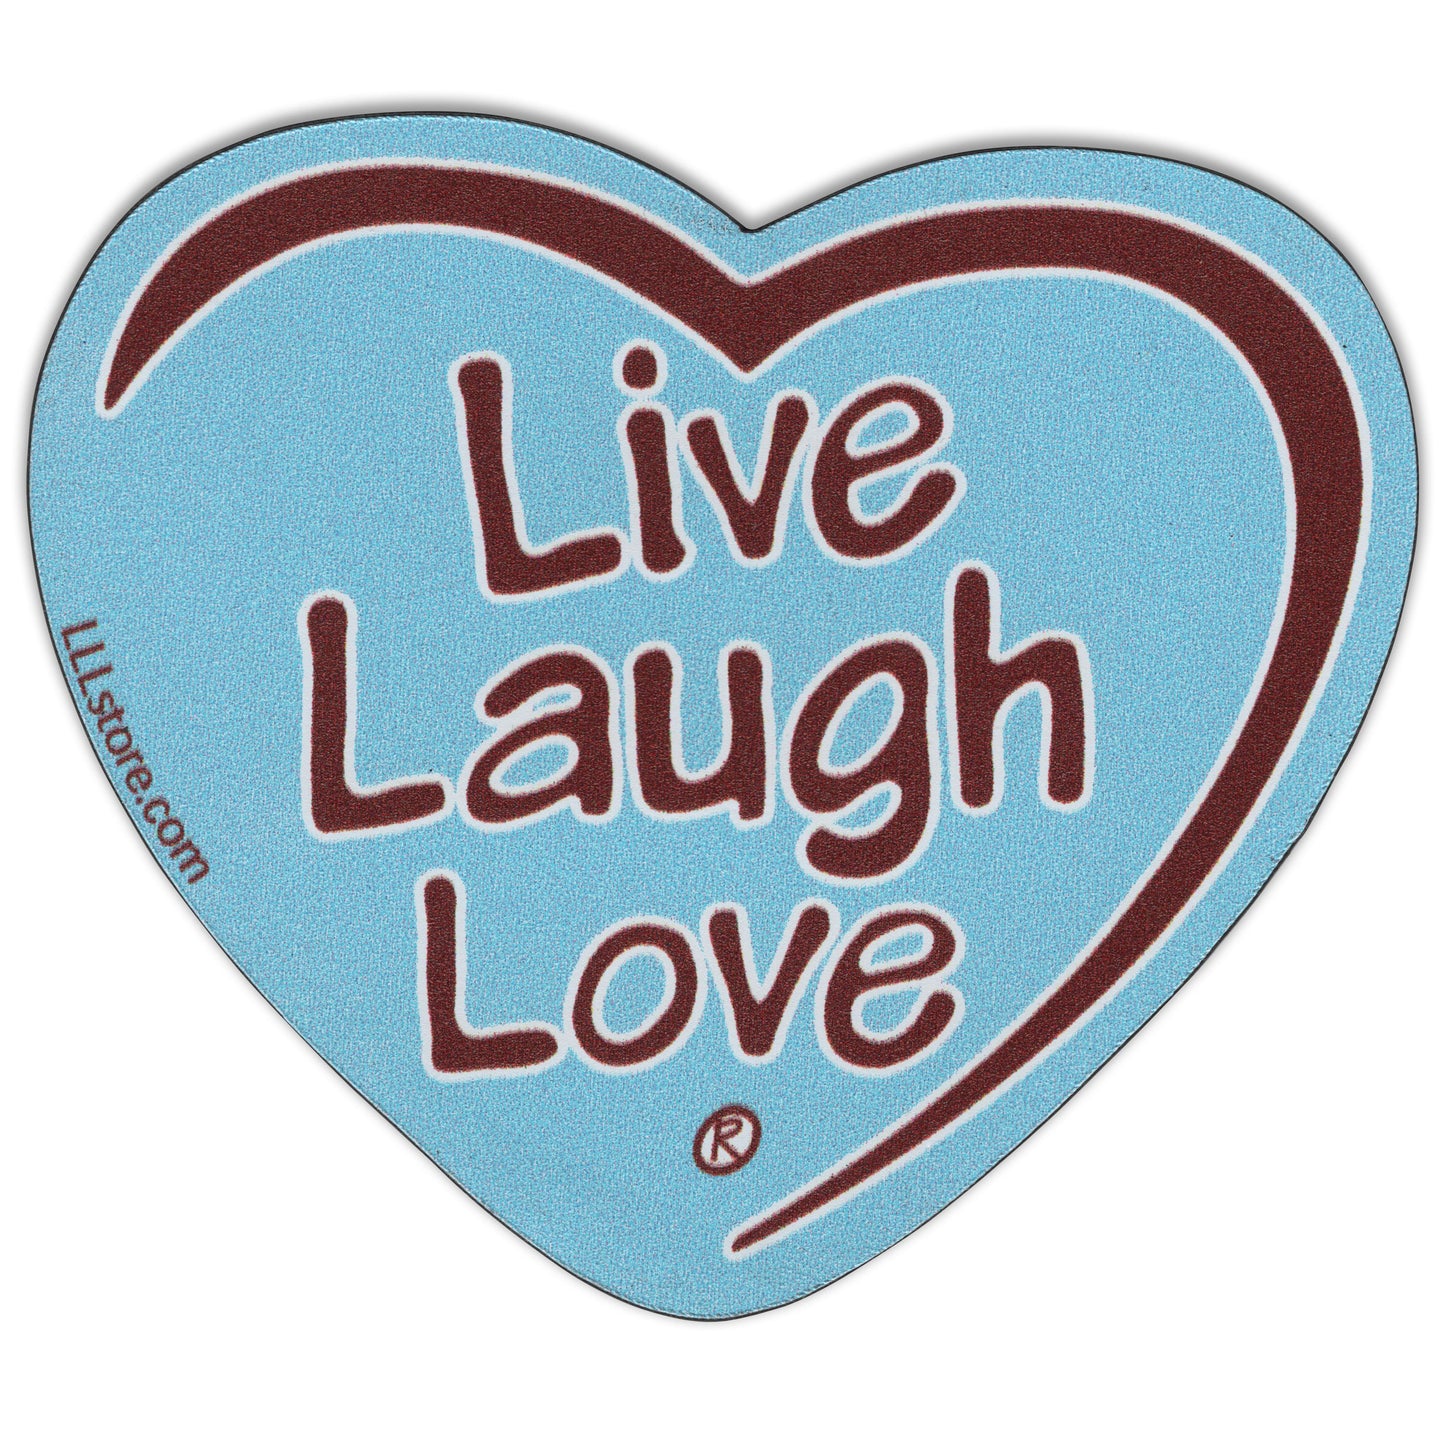 Live Laugh Love® Decorative Heart Shape Message Magnet - Ruddy on blue